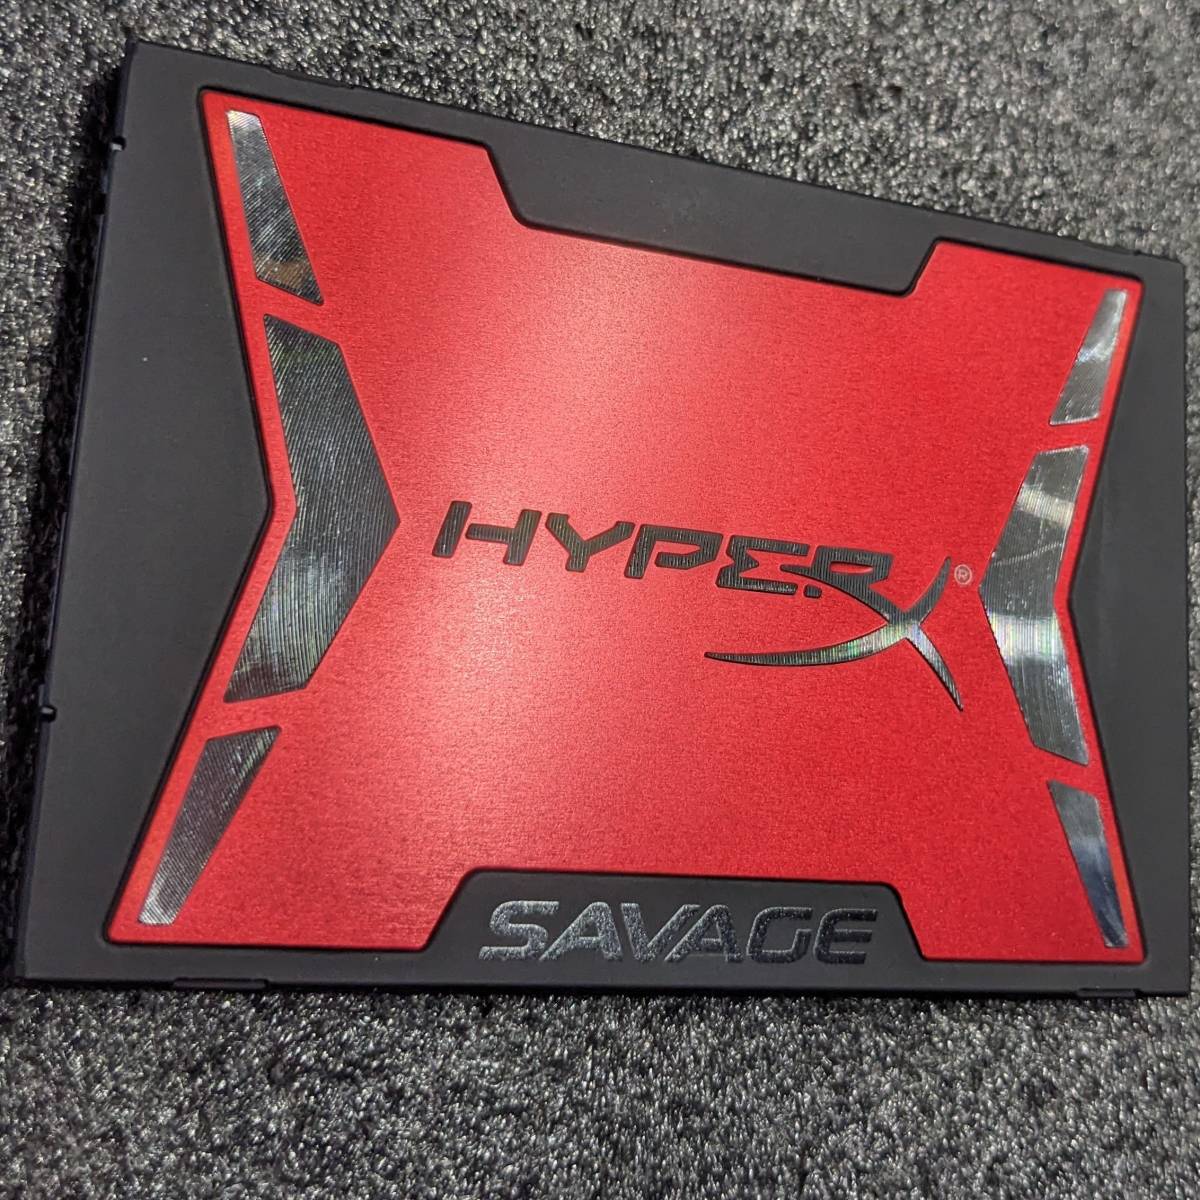 【中古】Kingston HyperX Savage 480GB SHSS37A/480G [2.5インチ SATA 7mm厚 MLC]